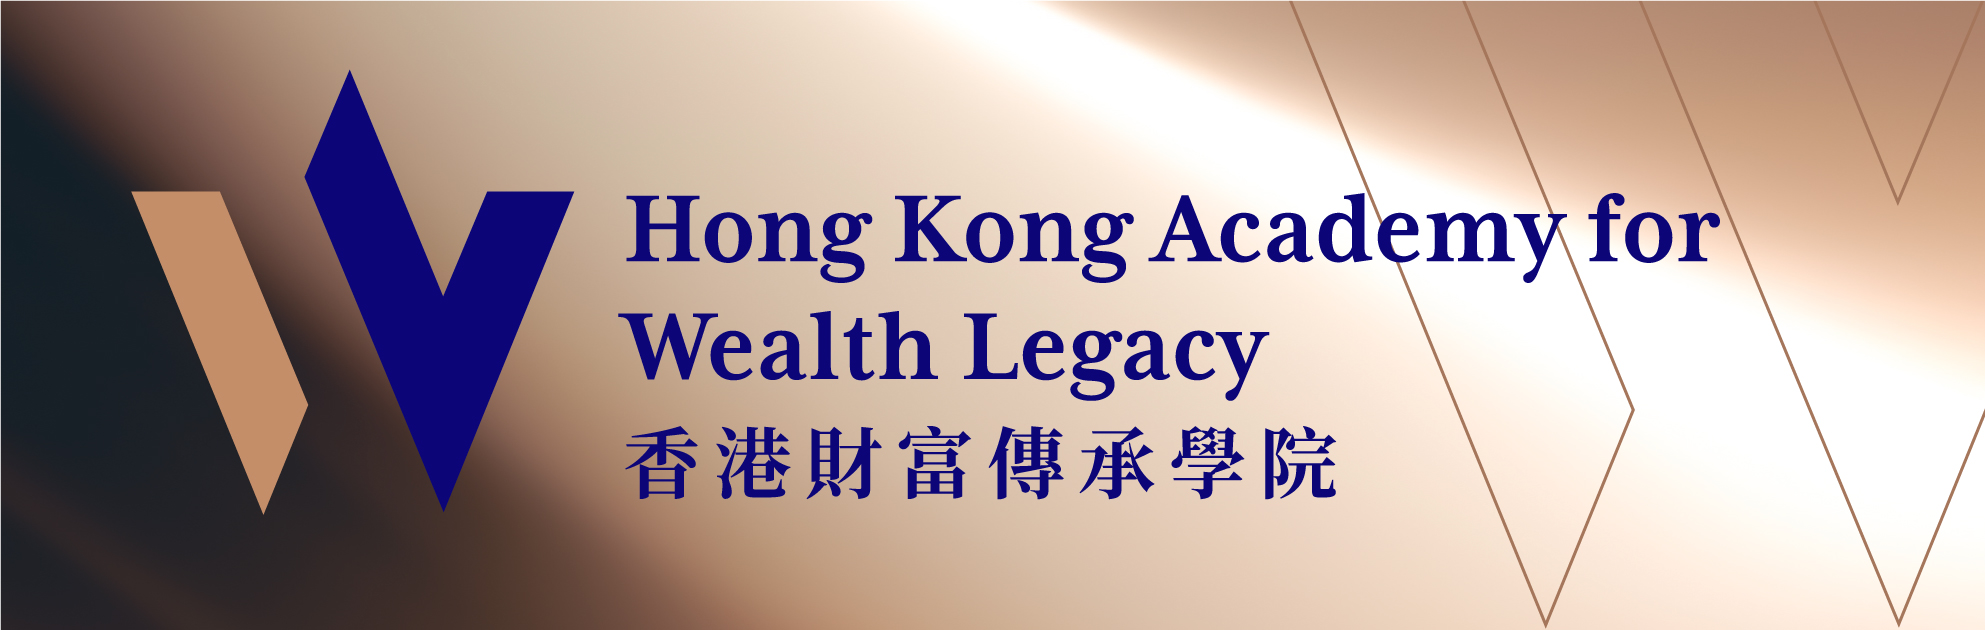 HKAWL Web Banner 1106